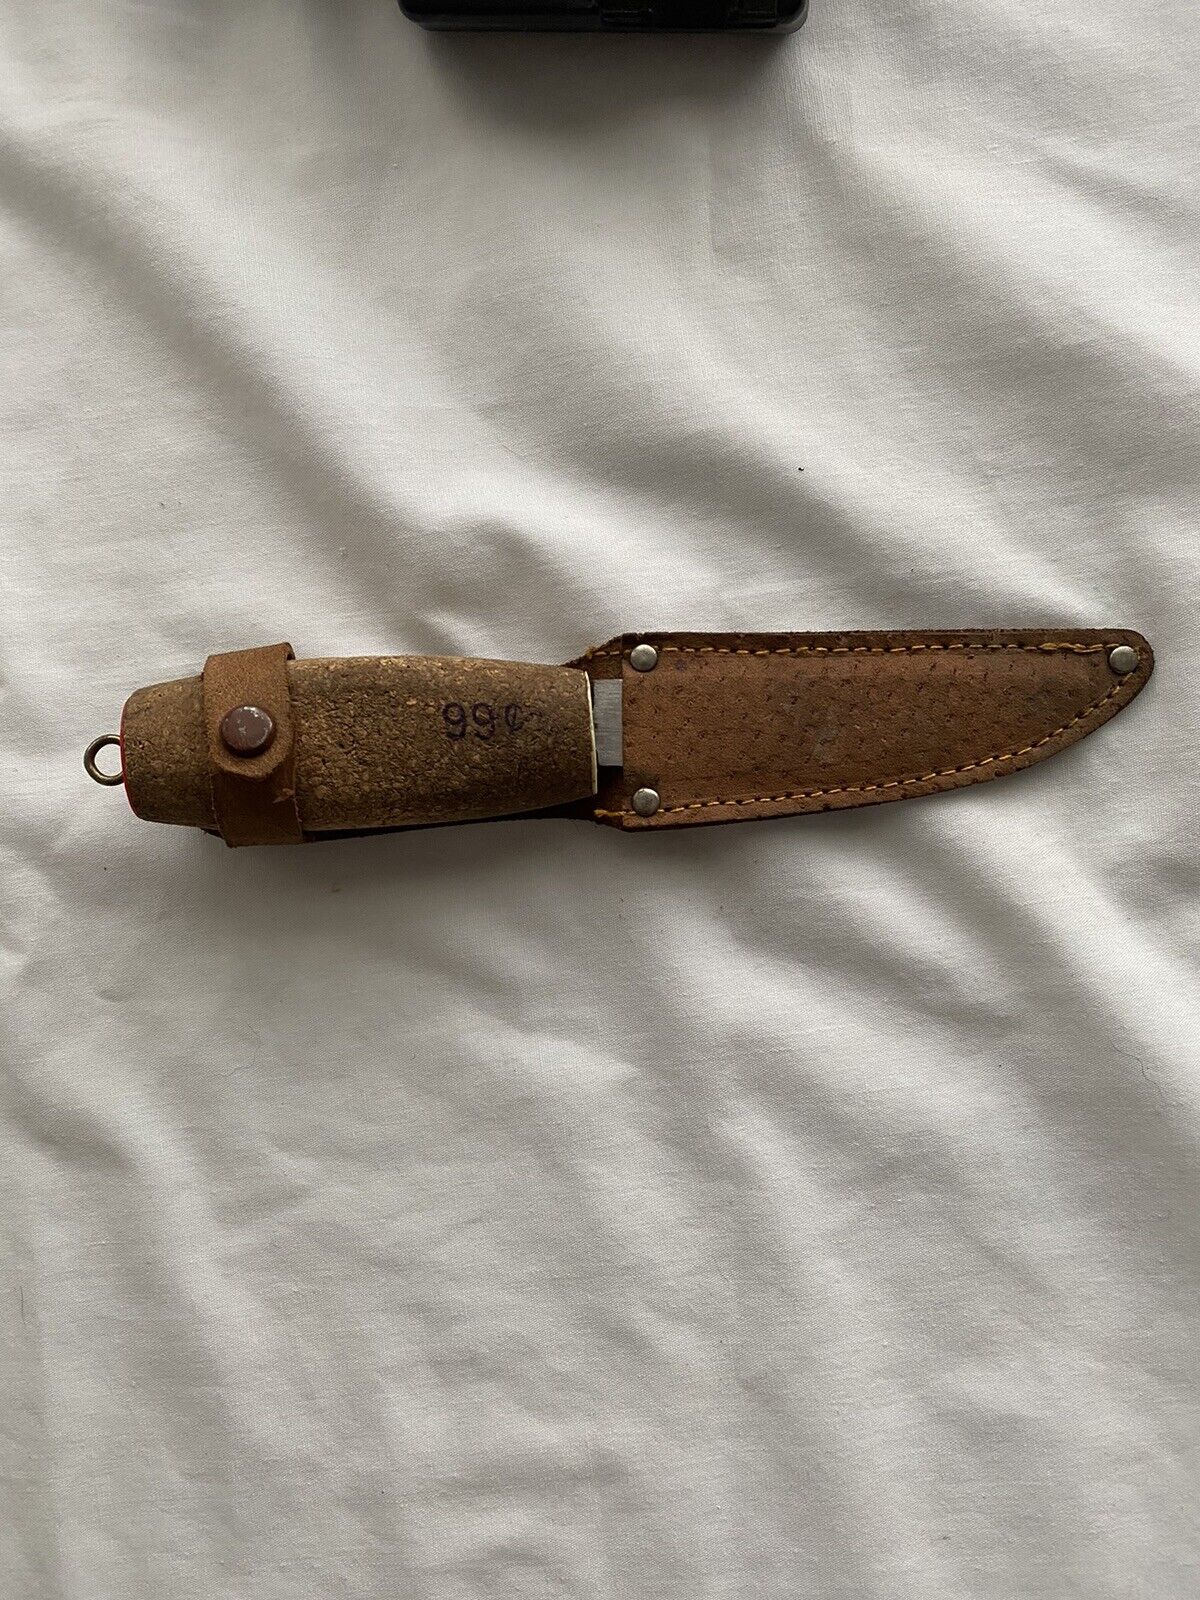 G. C. & Co.-Vintage Cork Handle Fishing Knife-W/Sheath-No. 390 4” Blade-Japan